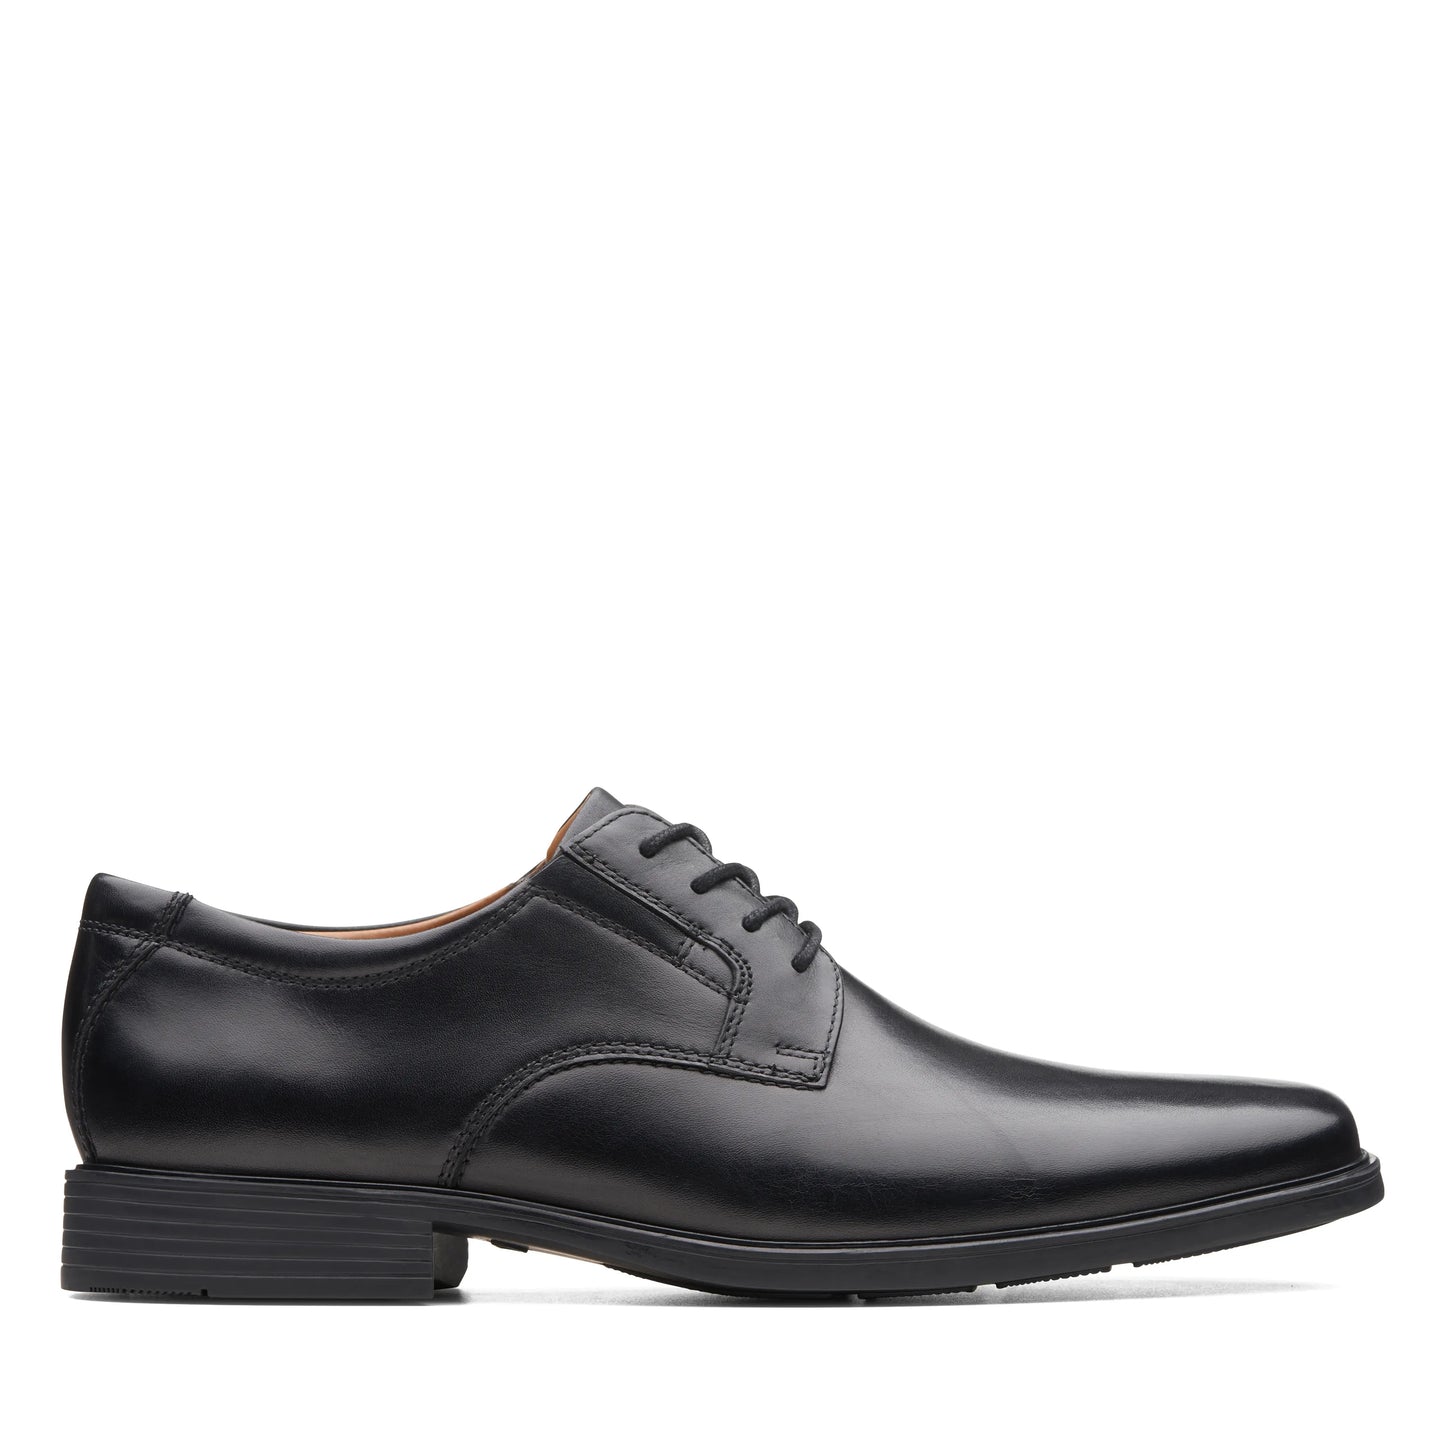 zapatos derby de la marca clarks modelo tilden plain black leather para hombre en color negro